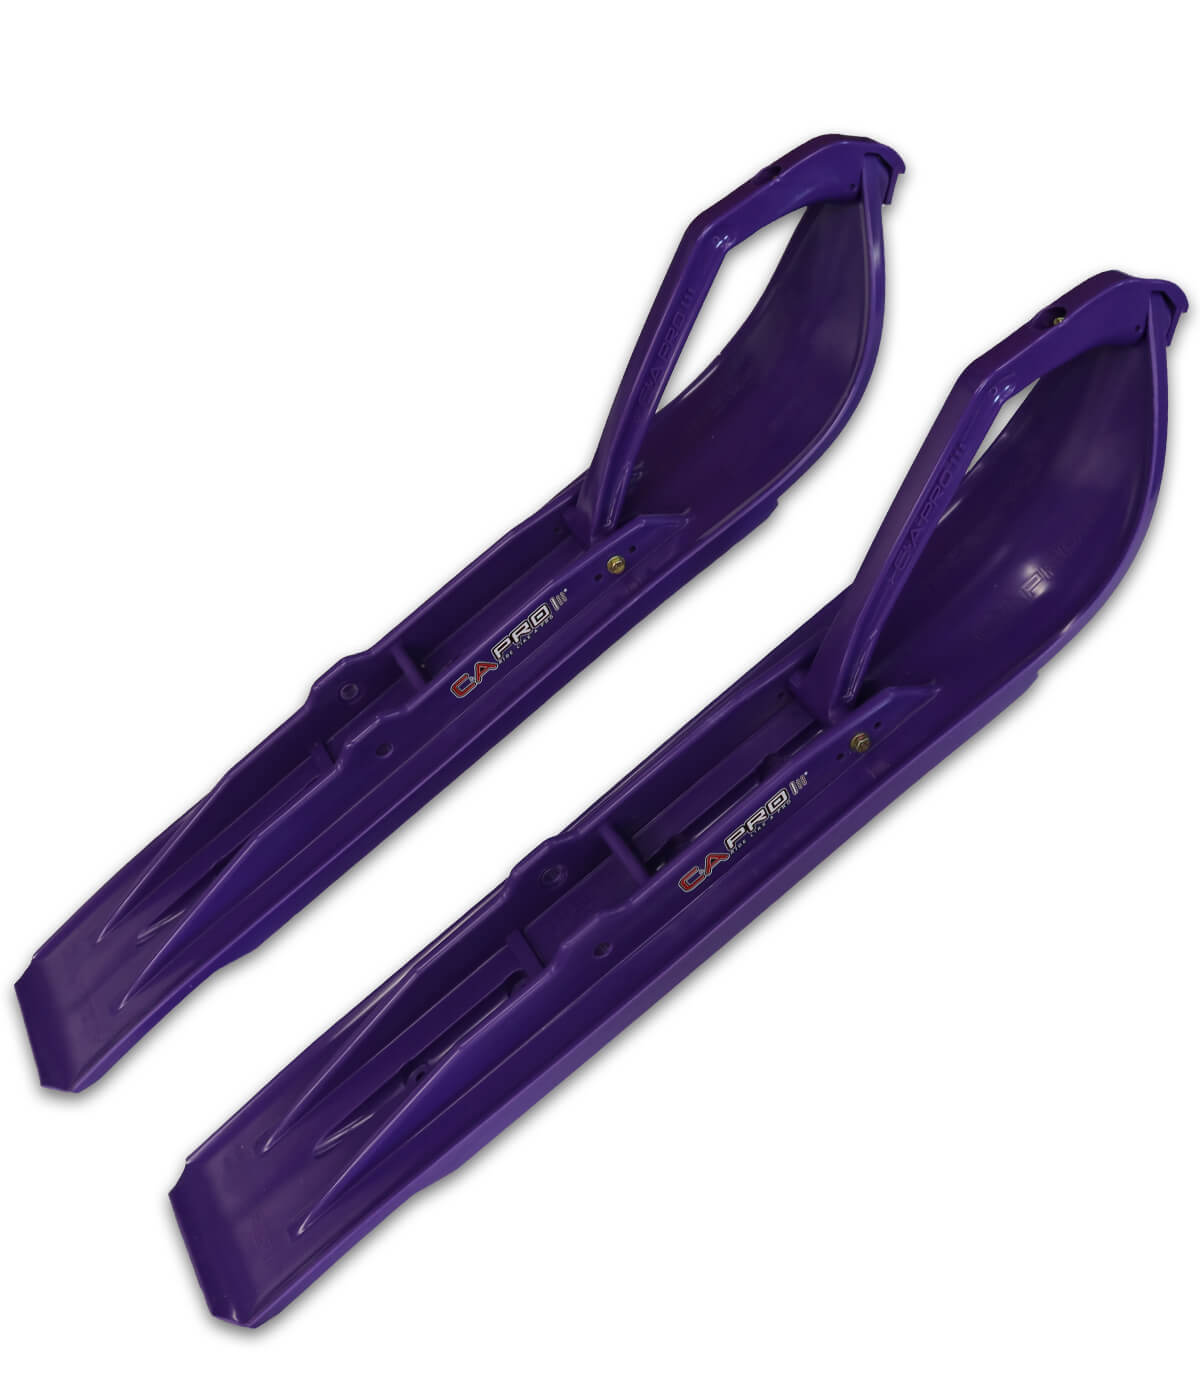 Custom Purple C&A Pro XT Snocross skis with purple handles